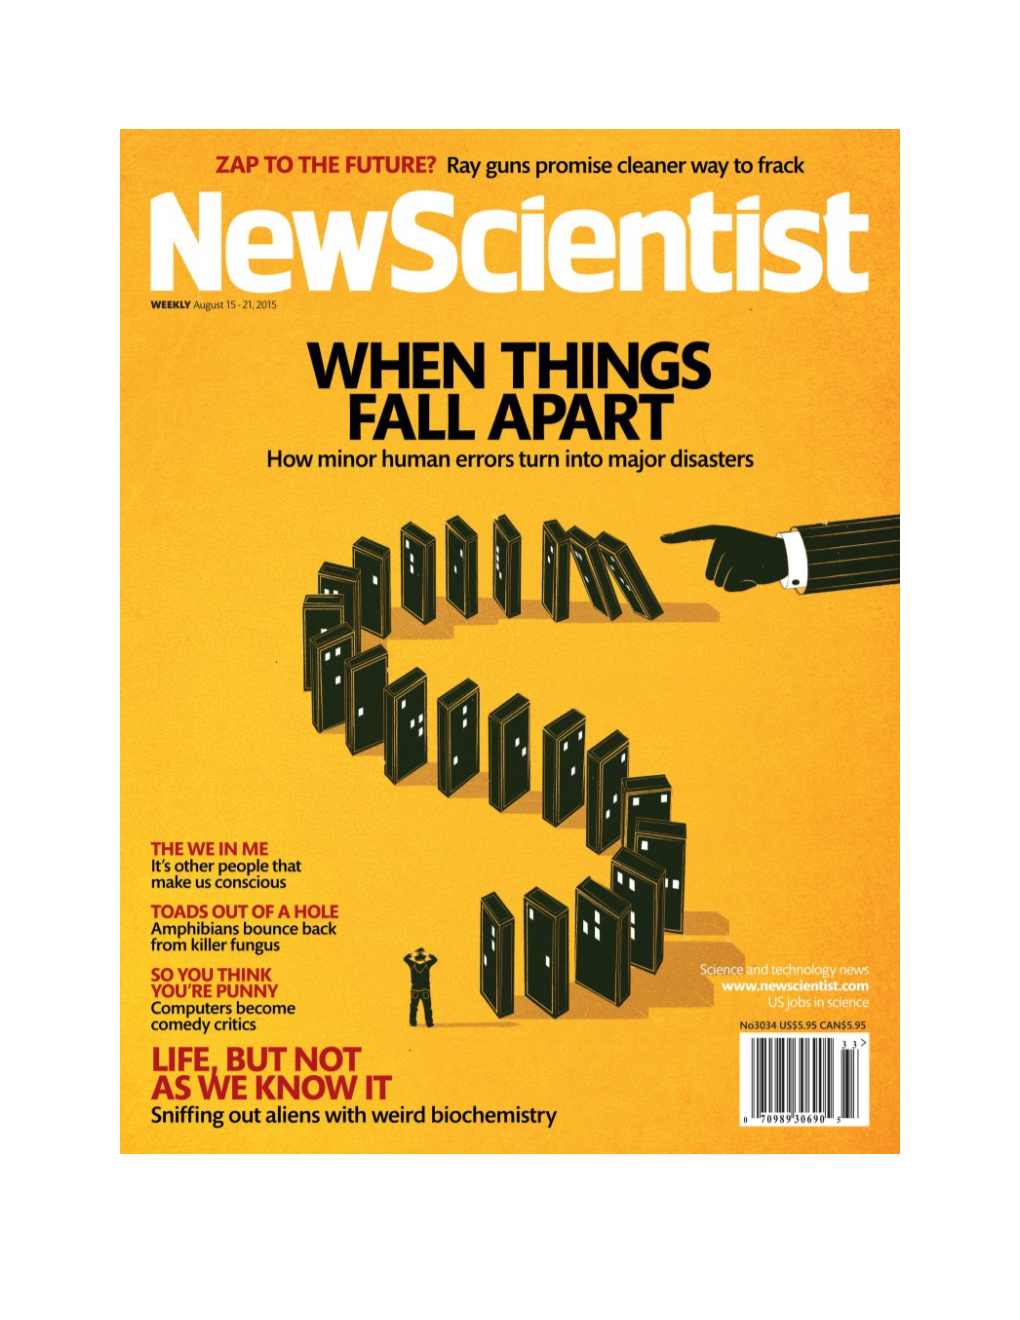 New Scientist Magazine Piece on Microwave Alternative to Fracking